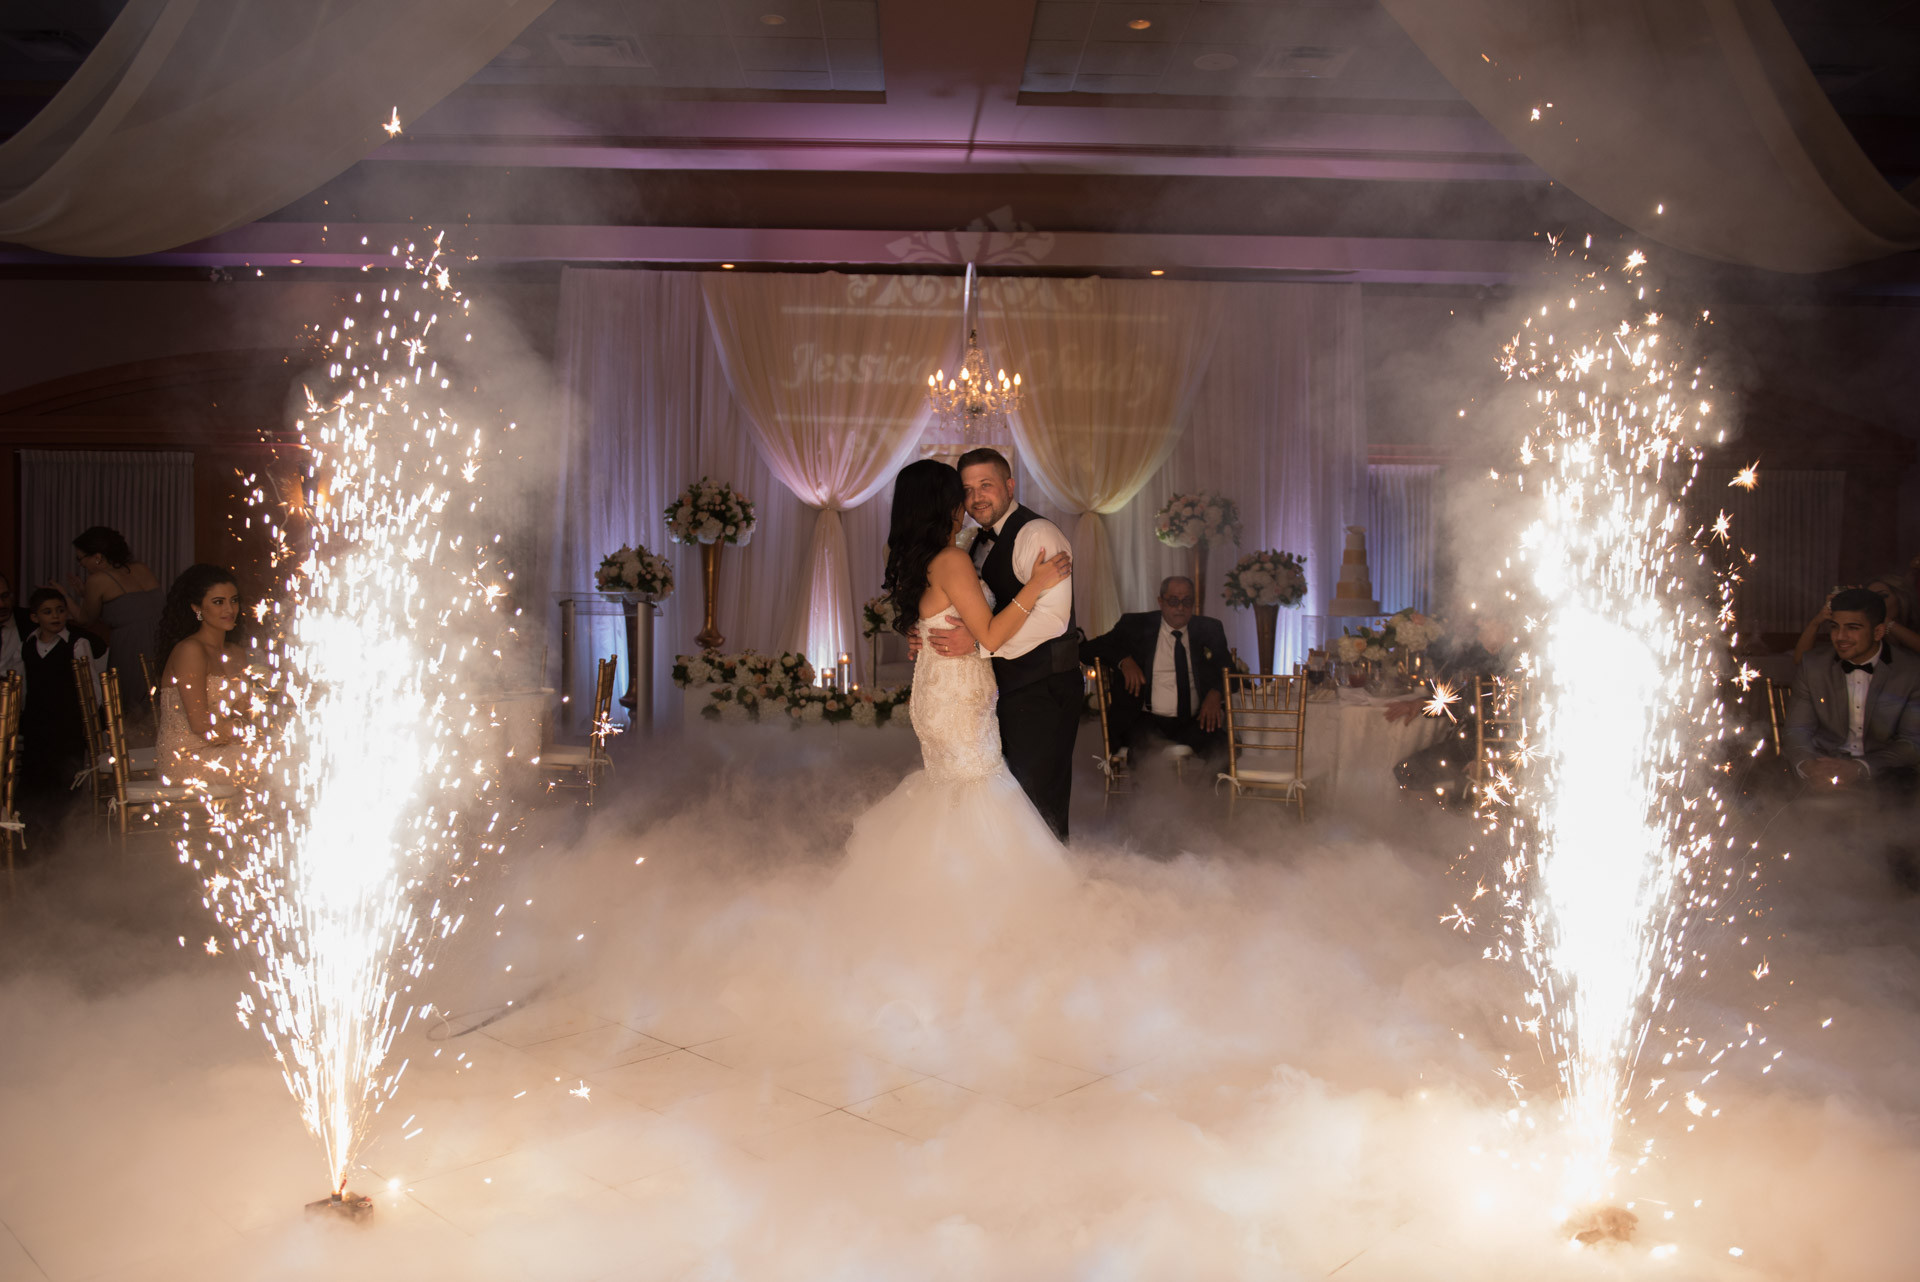 Indoor Sparklers For Weddings
 Sparklers Indoor Pyrotechnics SAFE INDOORS